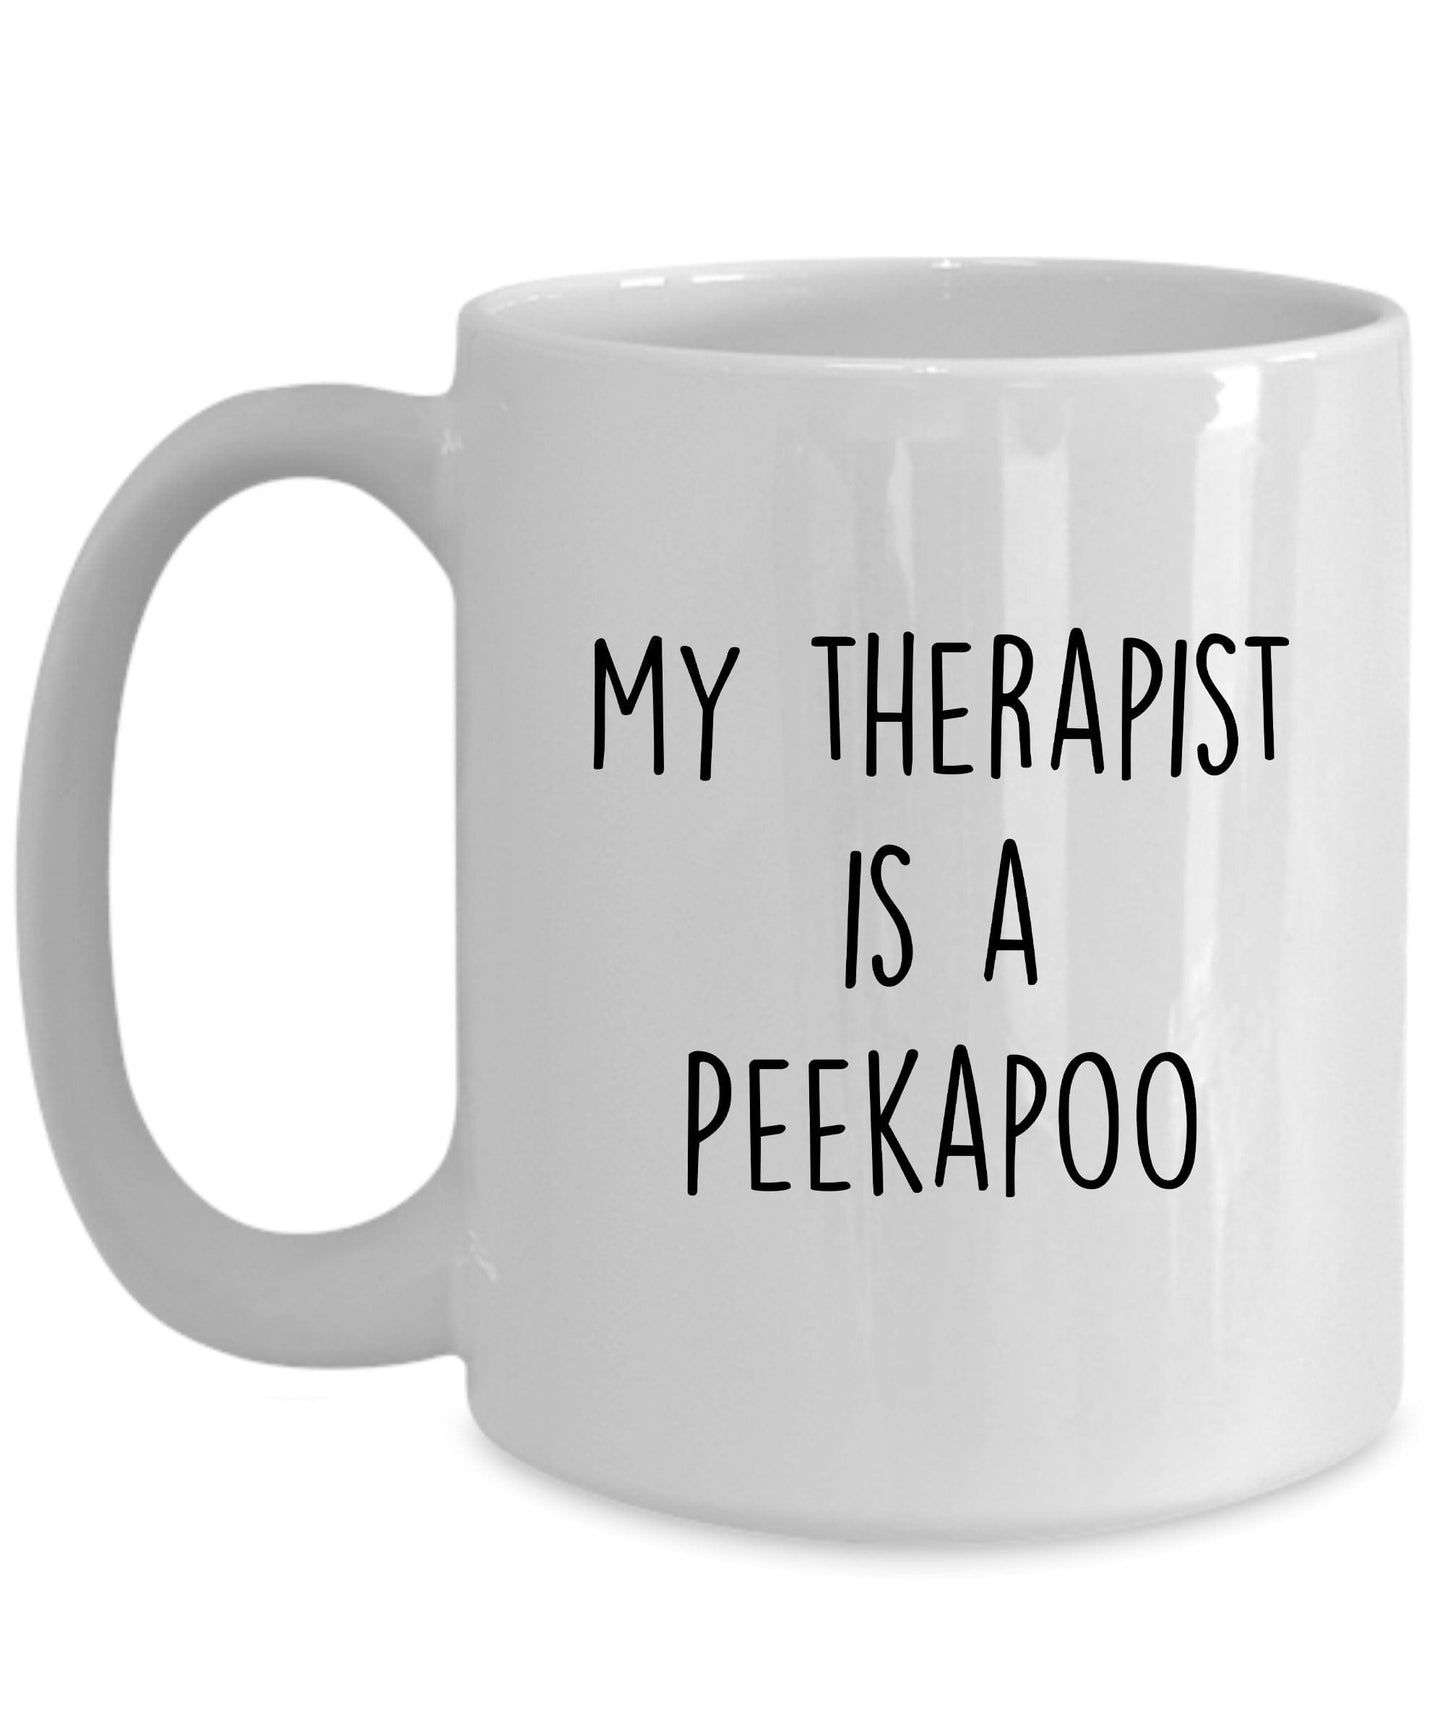 Peekapoo funny dog coffee mug - My Therapist is a Peekapoo